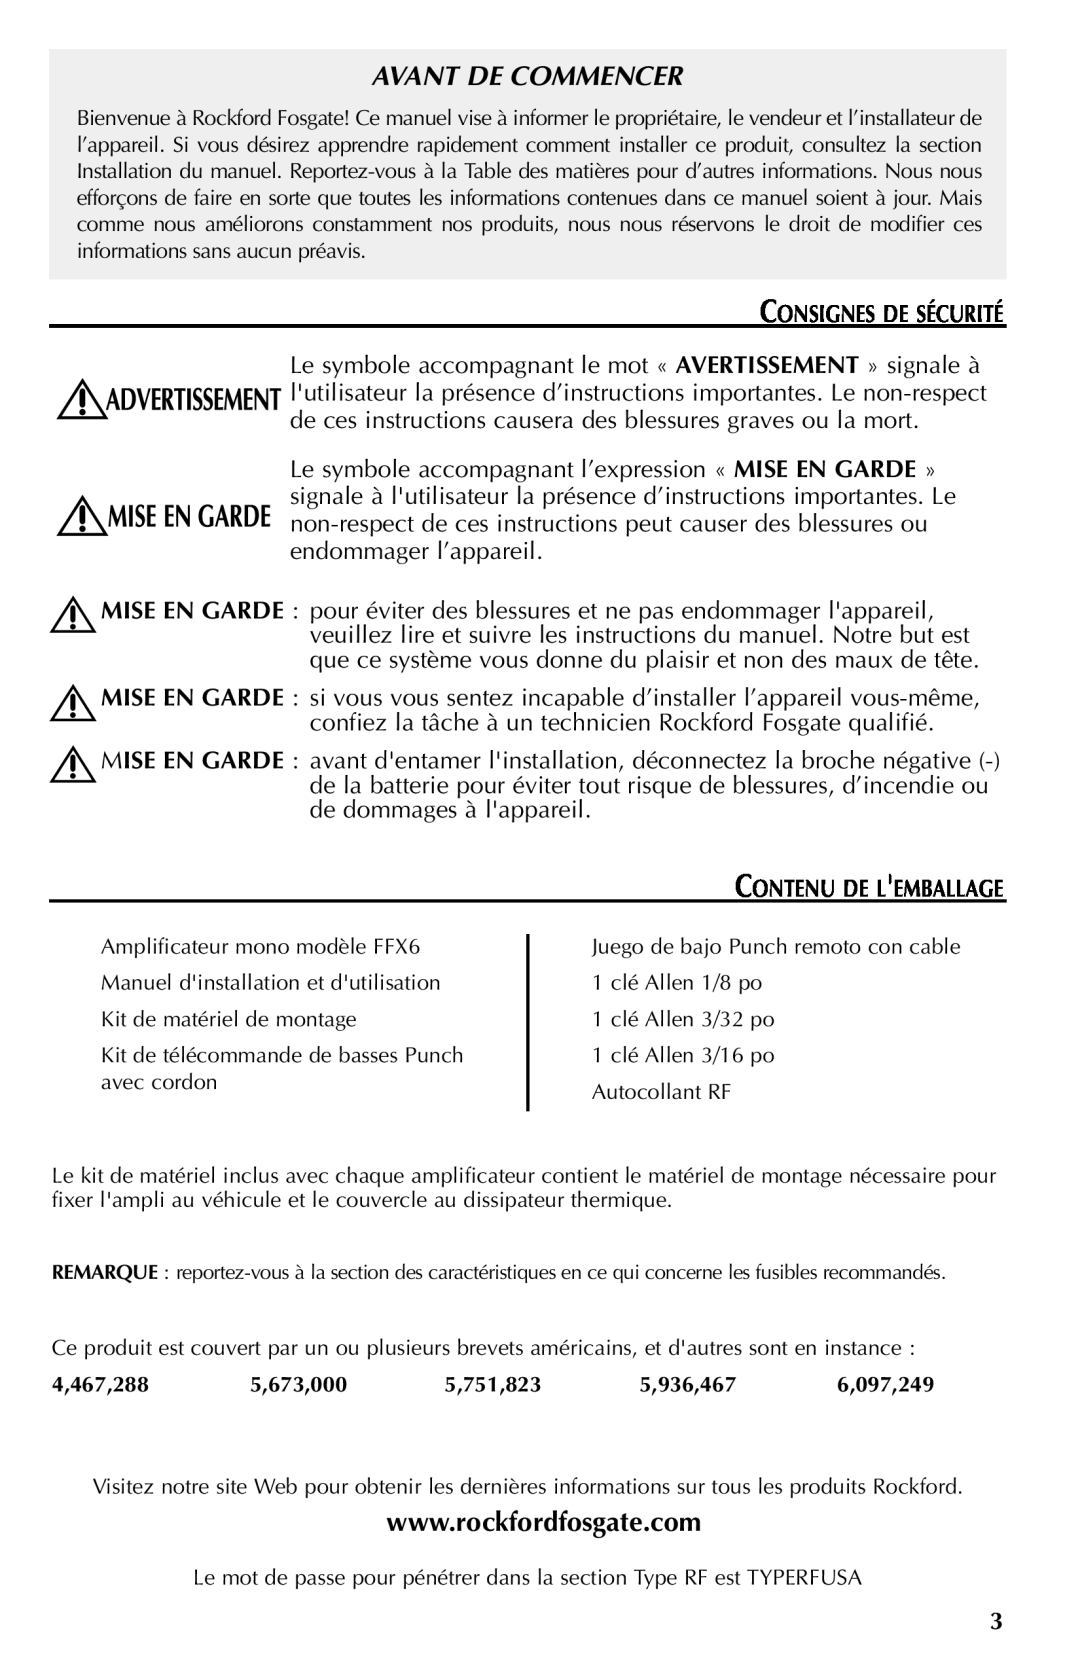 Rockford Fosgate FFX6 manual Avant De Commencer, Consignes De Sécurité, Contenu De Lemballage 